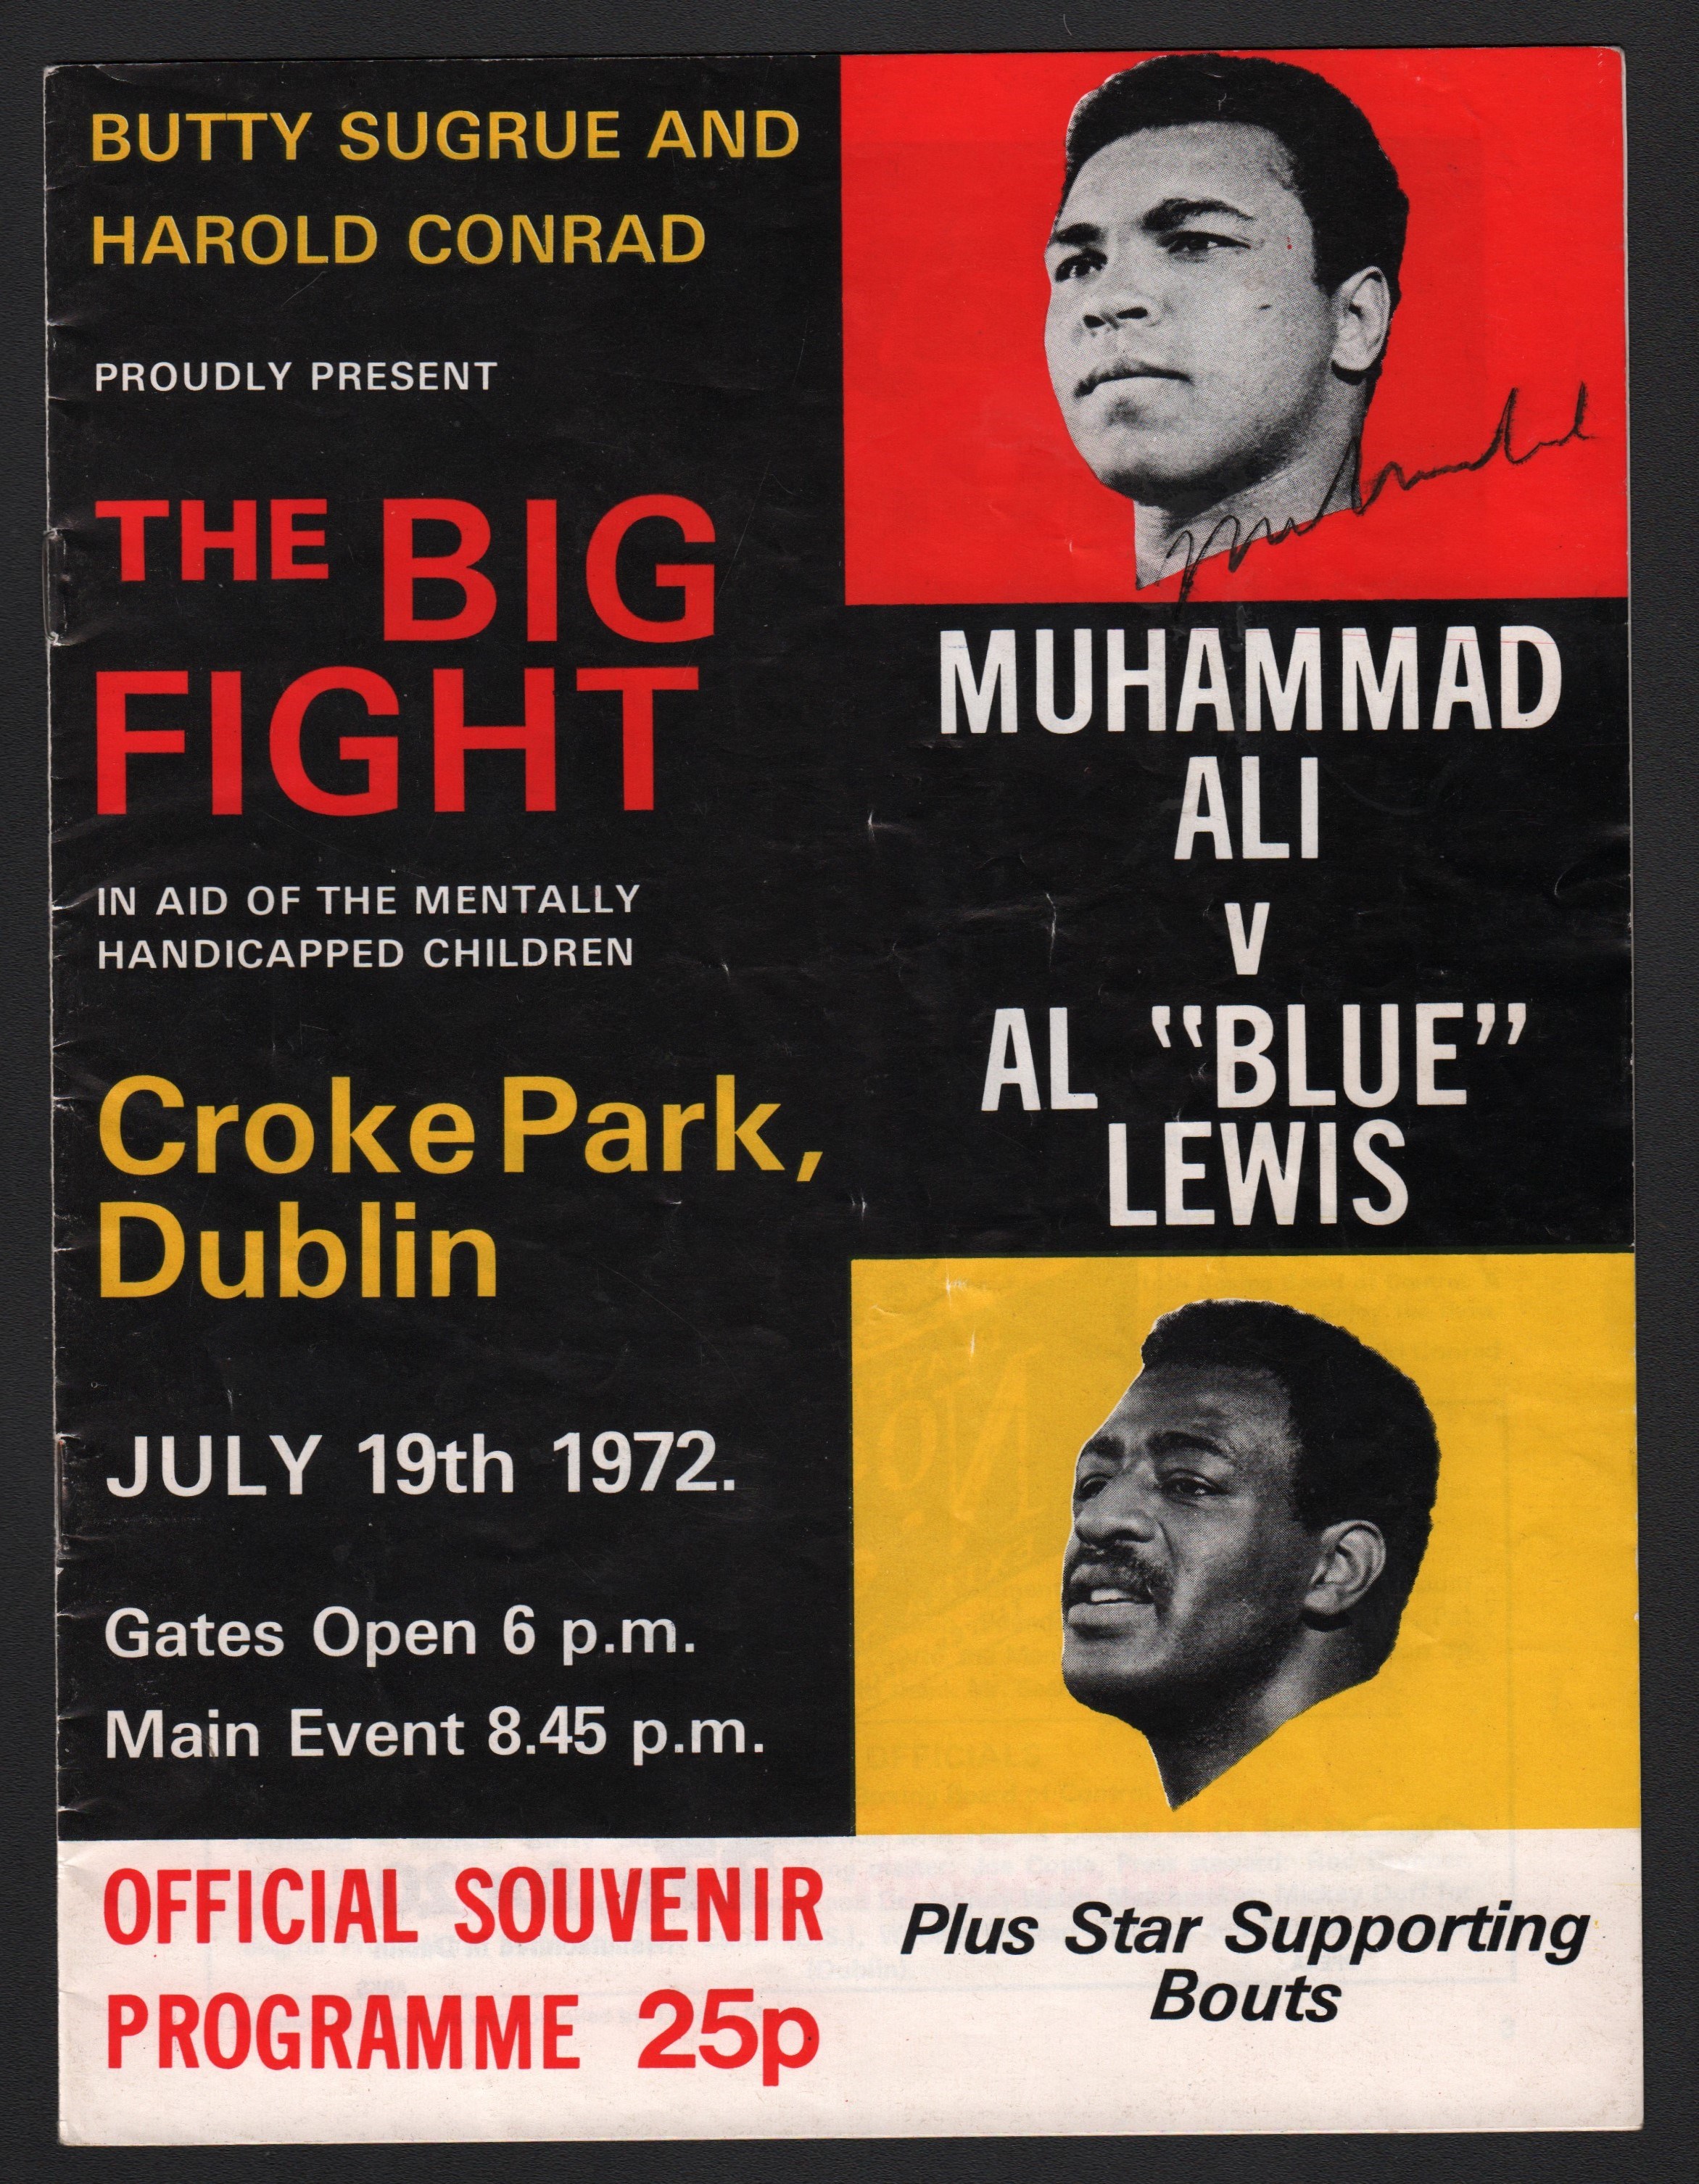 Muhammad Ali & Boxing - Signed Muhammad Ali vs. Al "Blue" Lewis fight program.